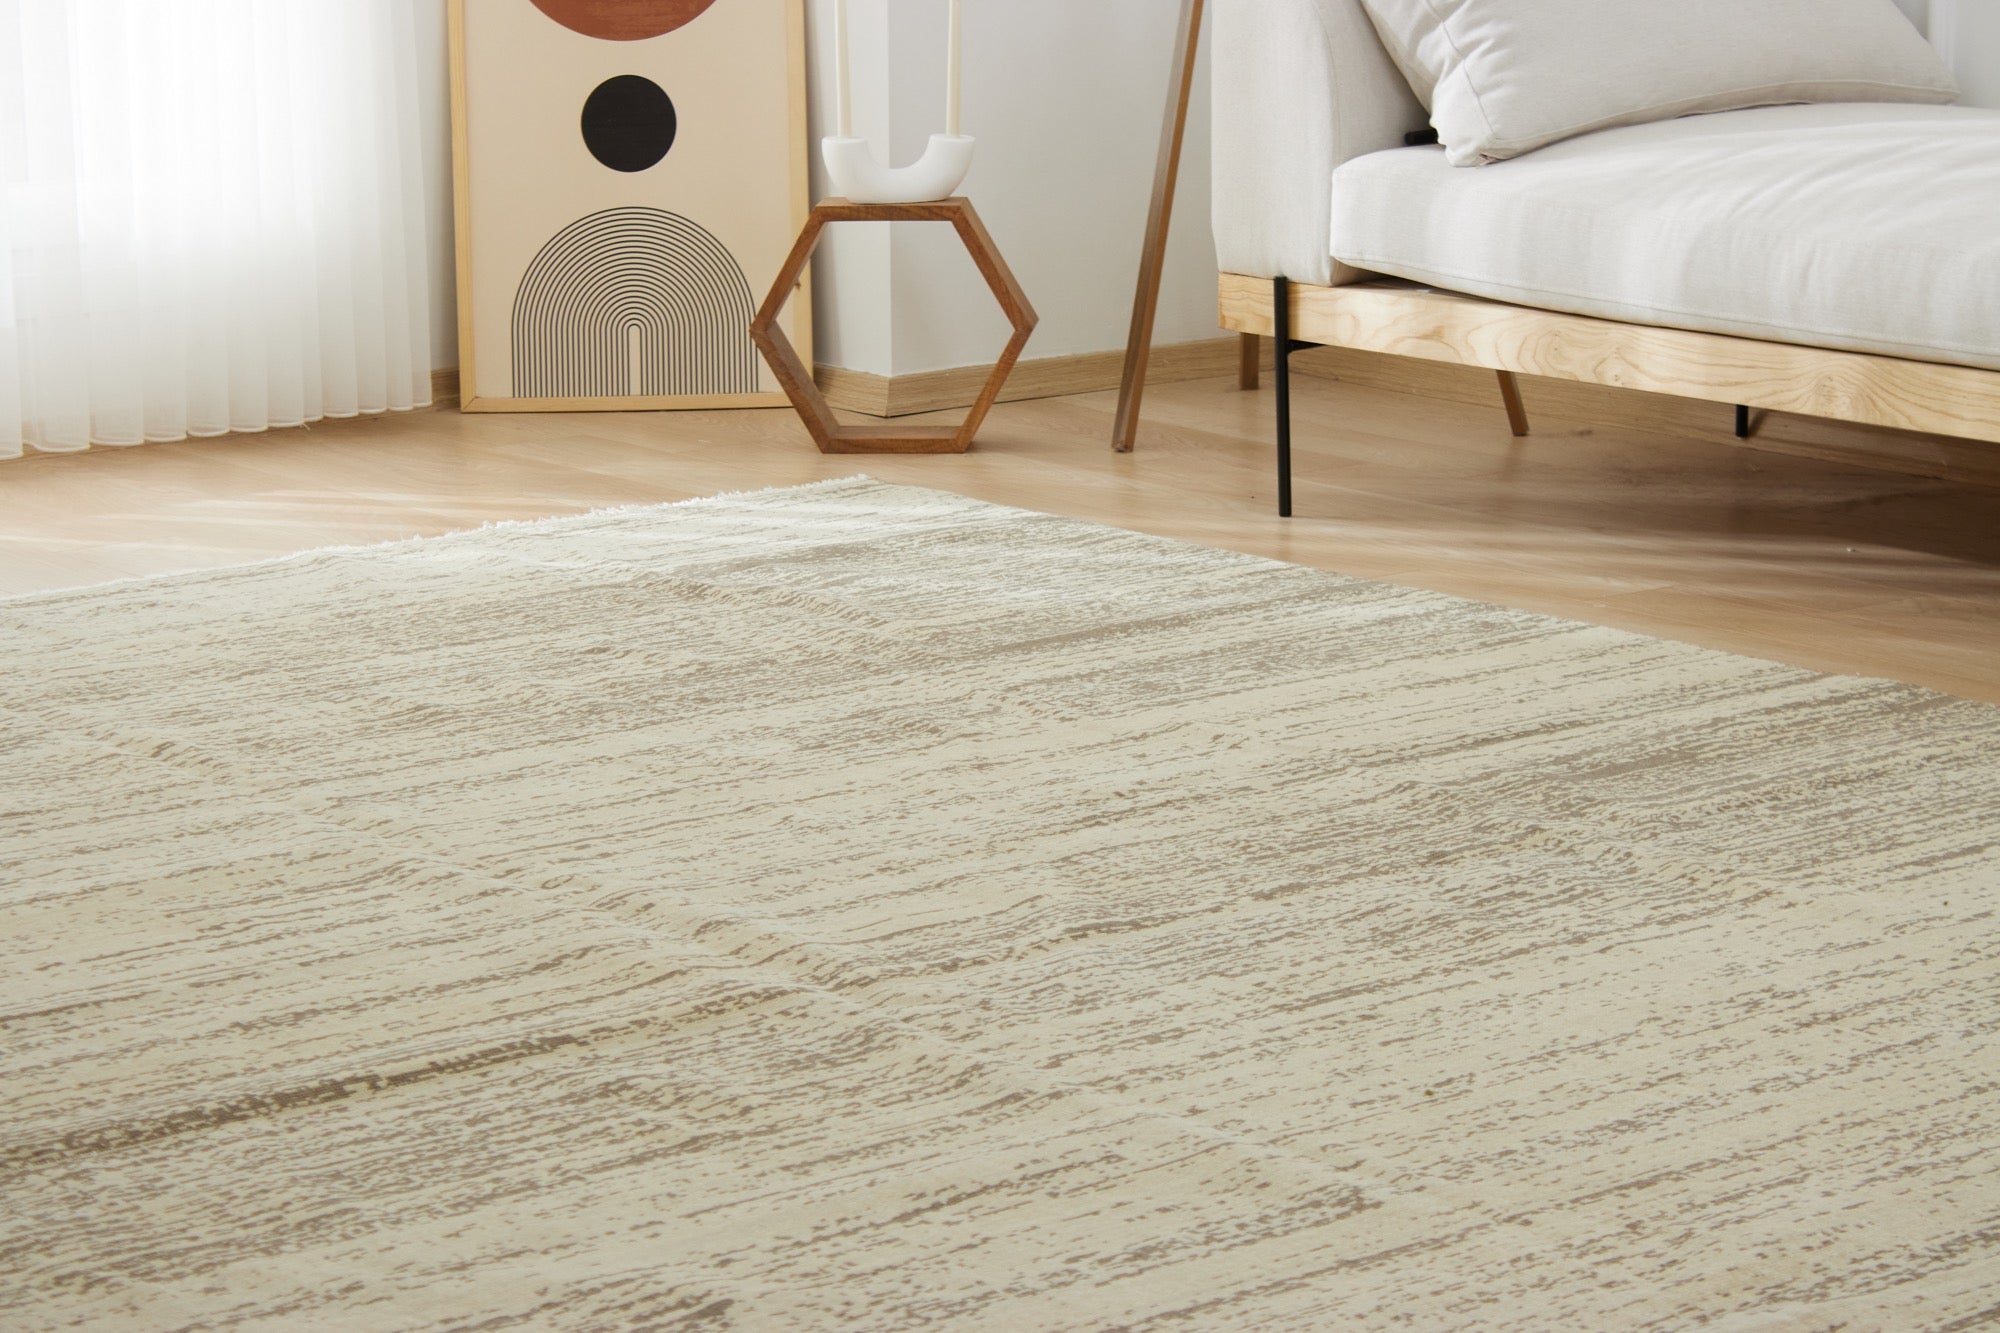 Kizzy | New Oriental-Inspired Artisan Carpet | Kuden Rugs